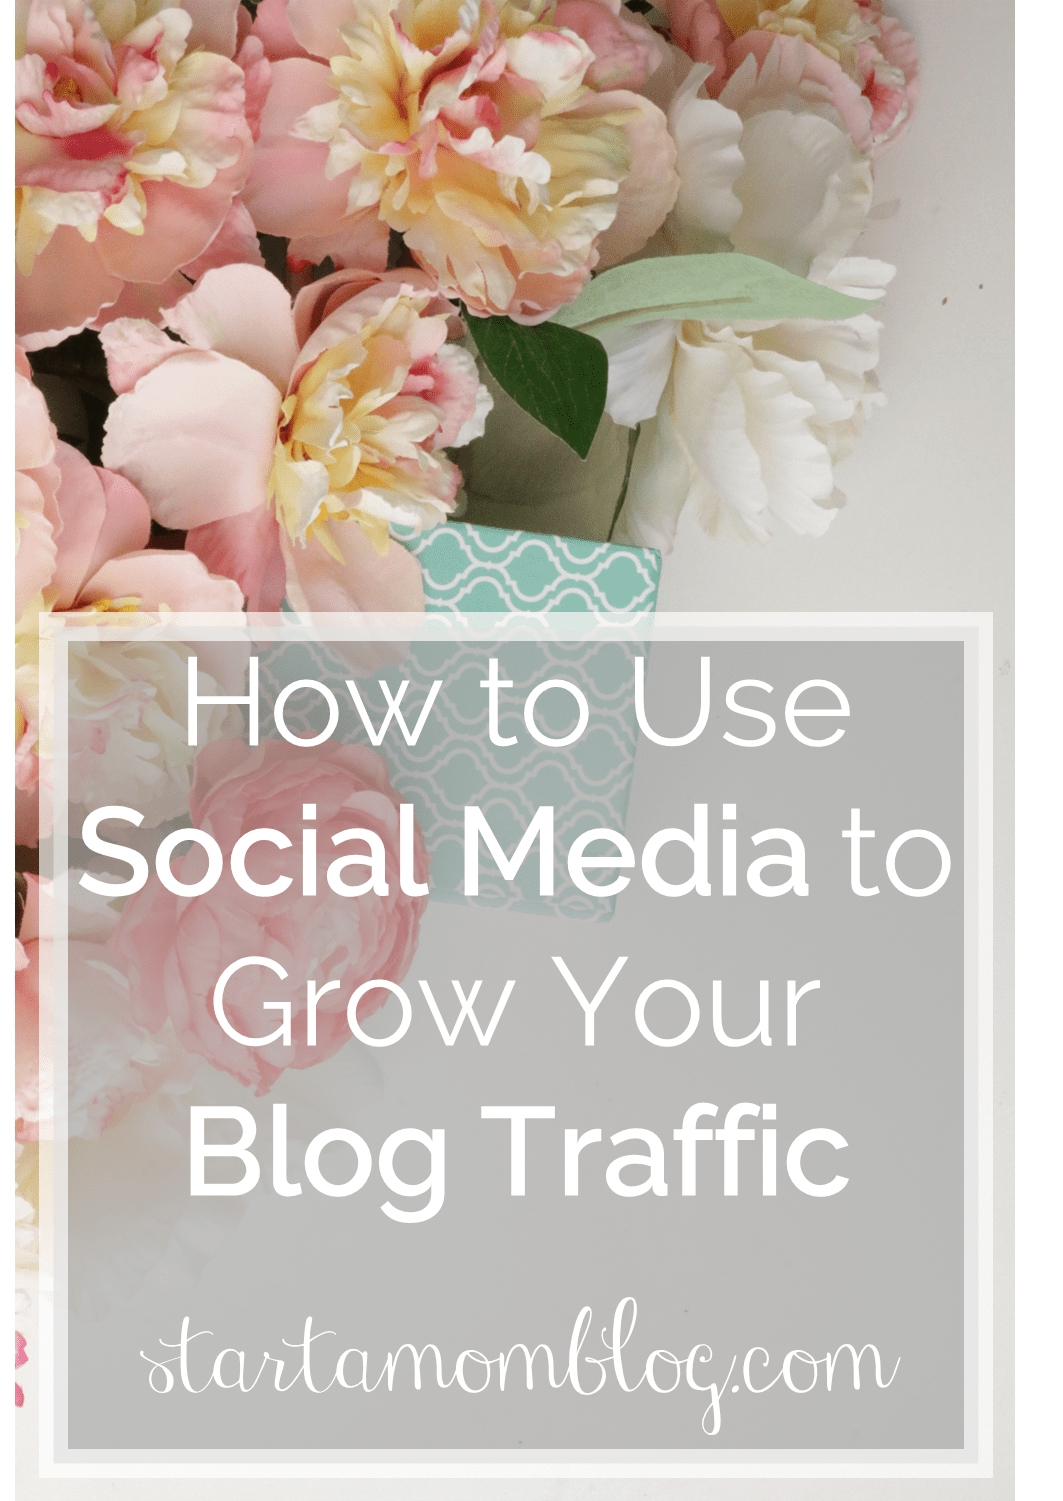 How to use Social Media to grow your Blog Traffic www.startamomblog.com